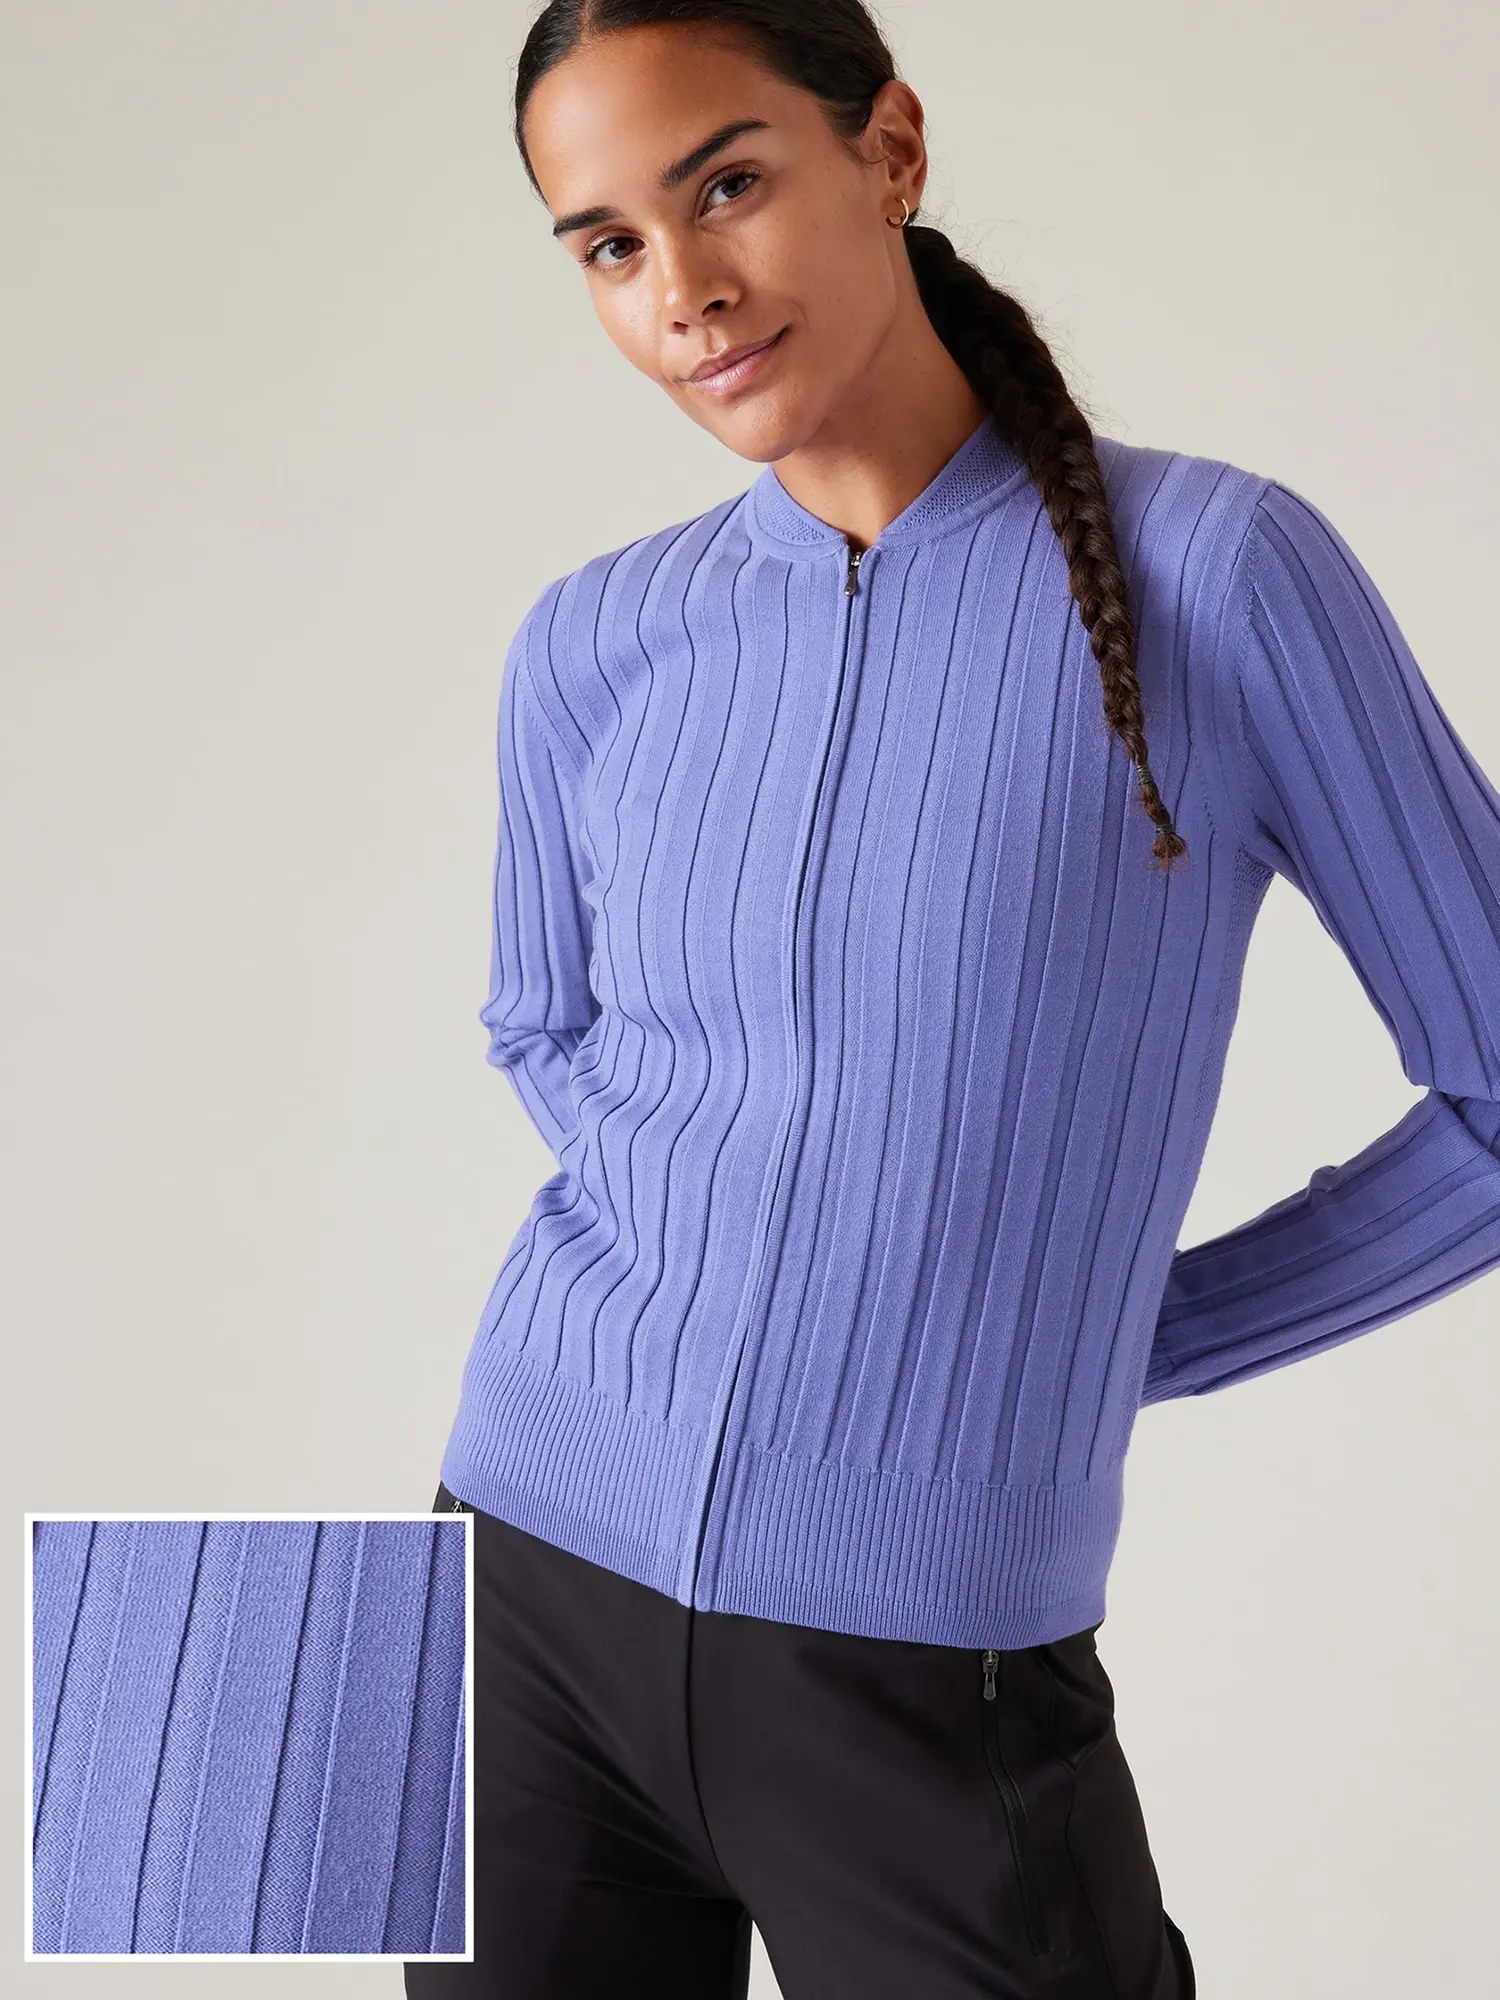 Athleta Fairway Sweater blue. 1